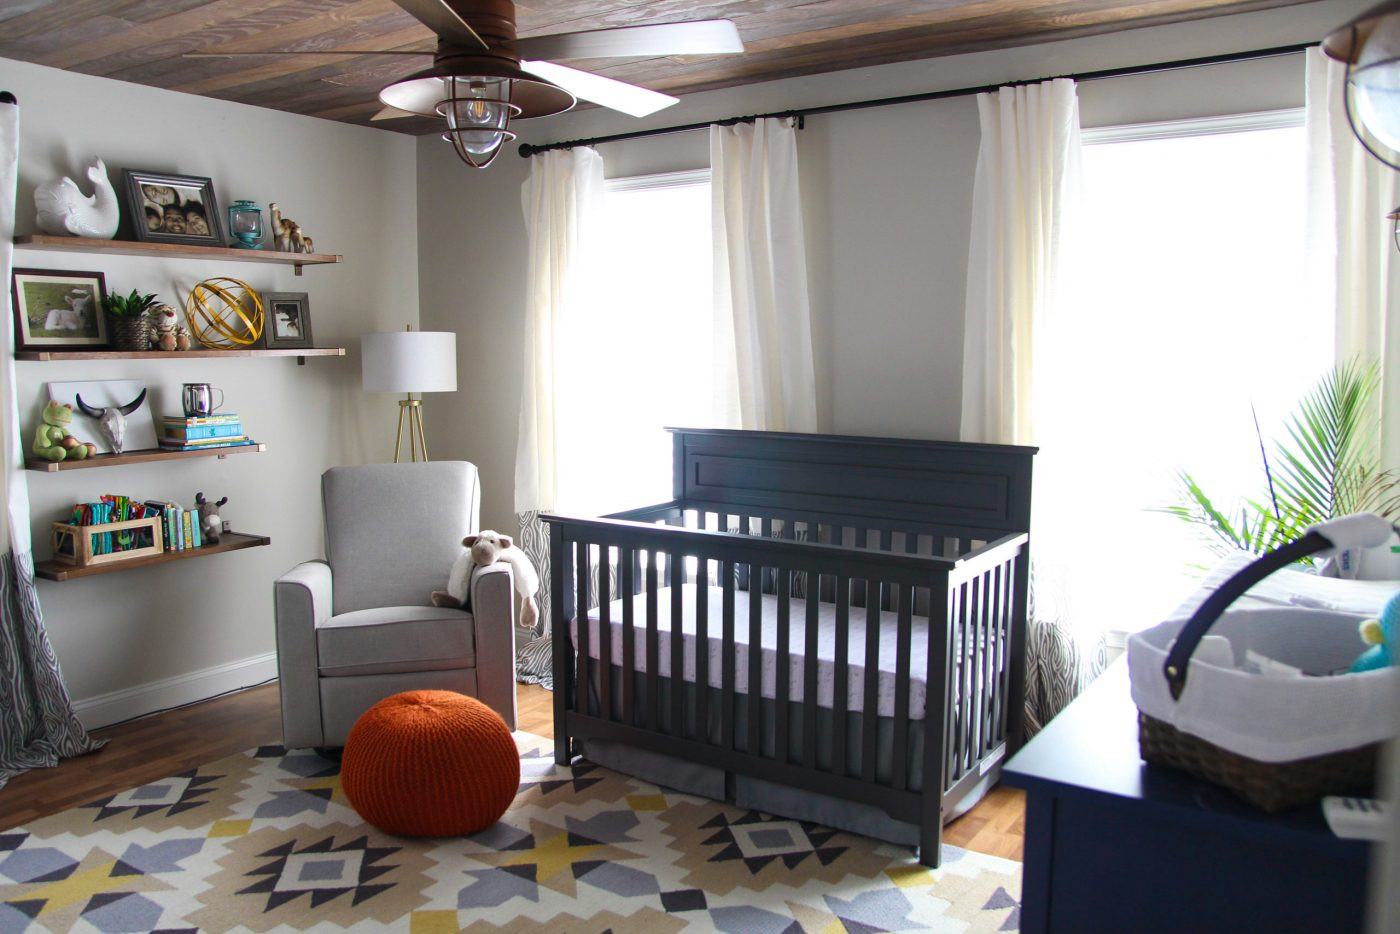 How To Decorate A Newborn Baby Boy Room
 Woodland Nursery Decor A Rustic Retreat for a Baby Boy